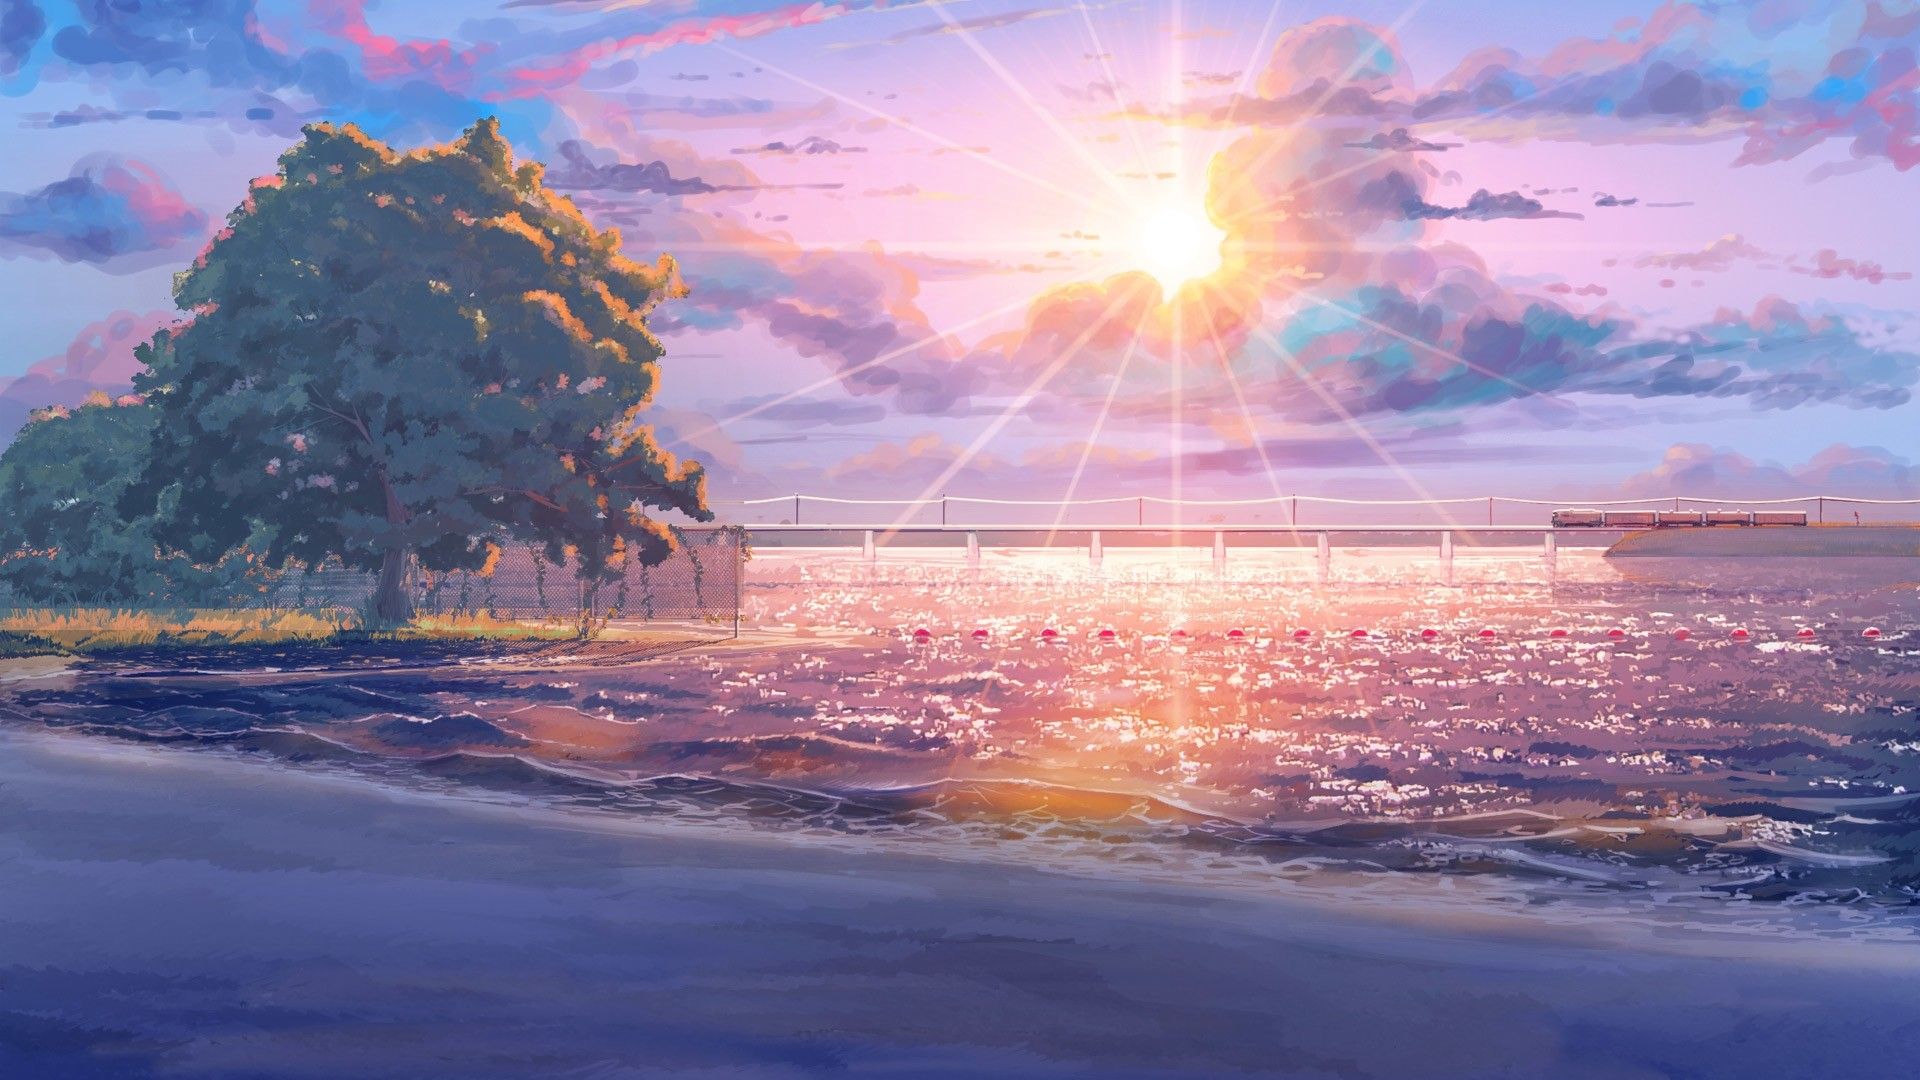 Anime scenery sunset beach wallpaper background for your desktop laptop computer - Anime landscape, landscape